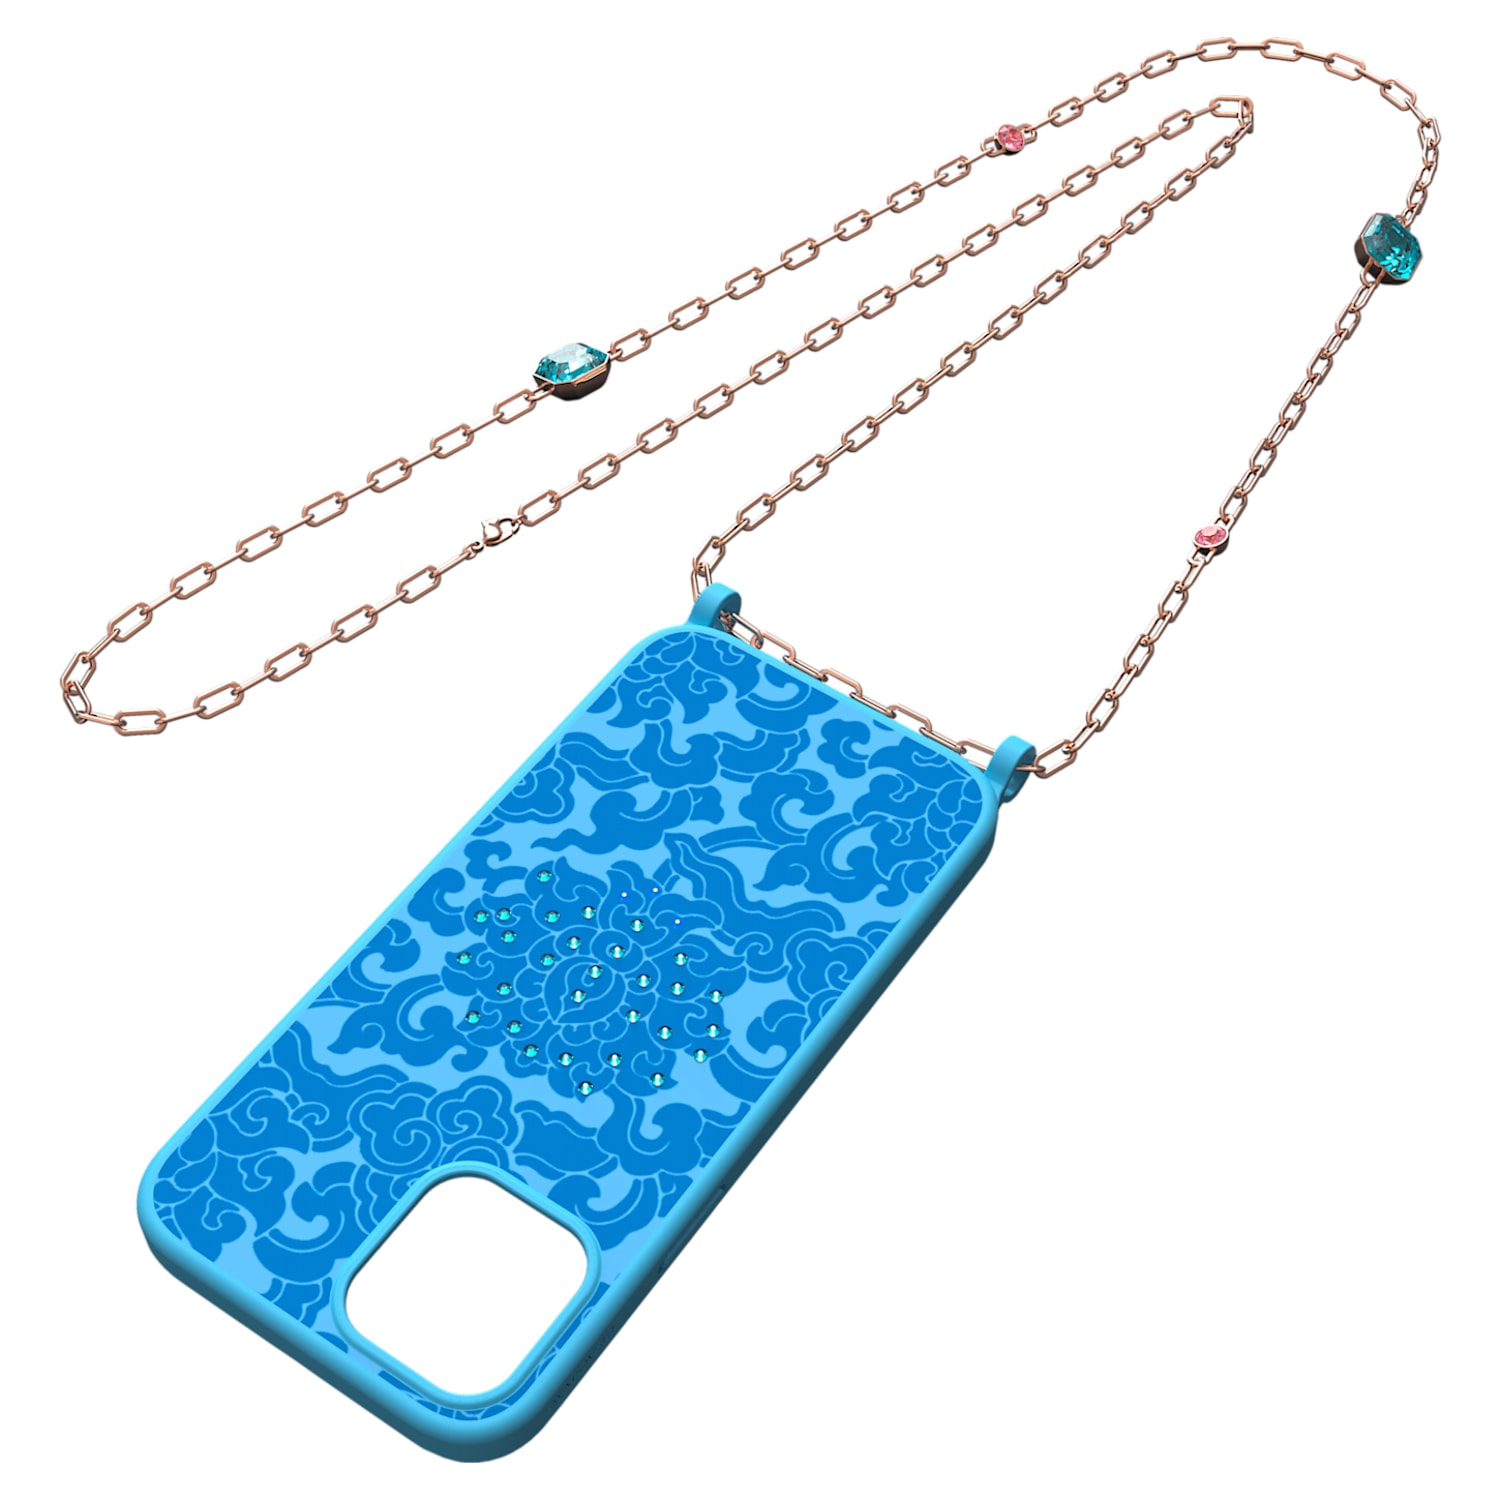 Connexus Smartphone Case Iphone 12 Pro Max Blue Rose Gold Tone Plated Swarovski Com